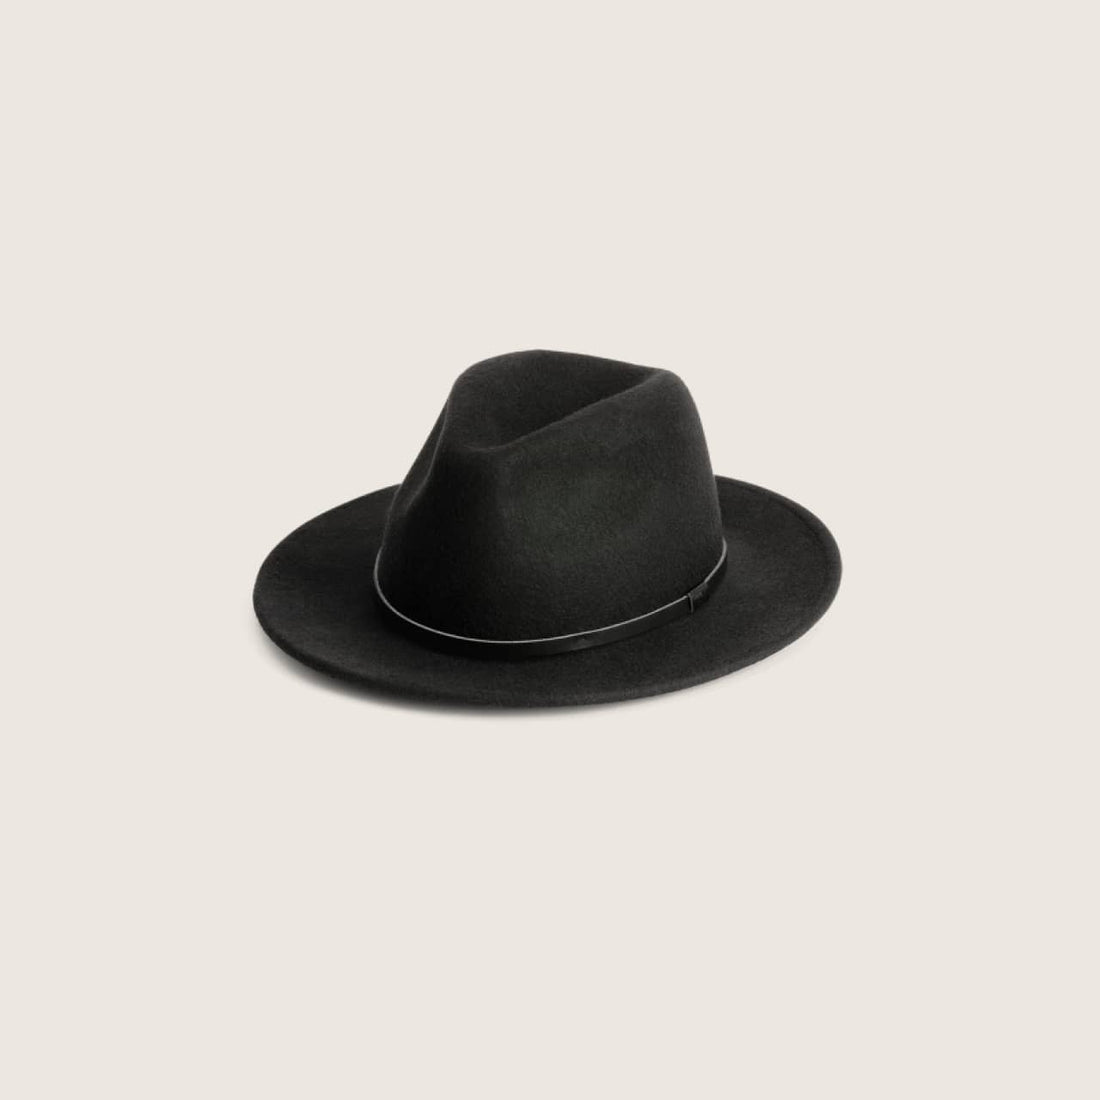 Will + Bear 100% Natural Australian Wool Fedora Hat - William